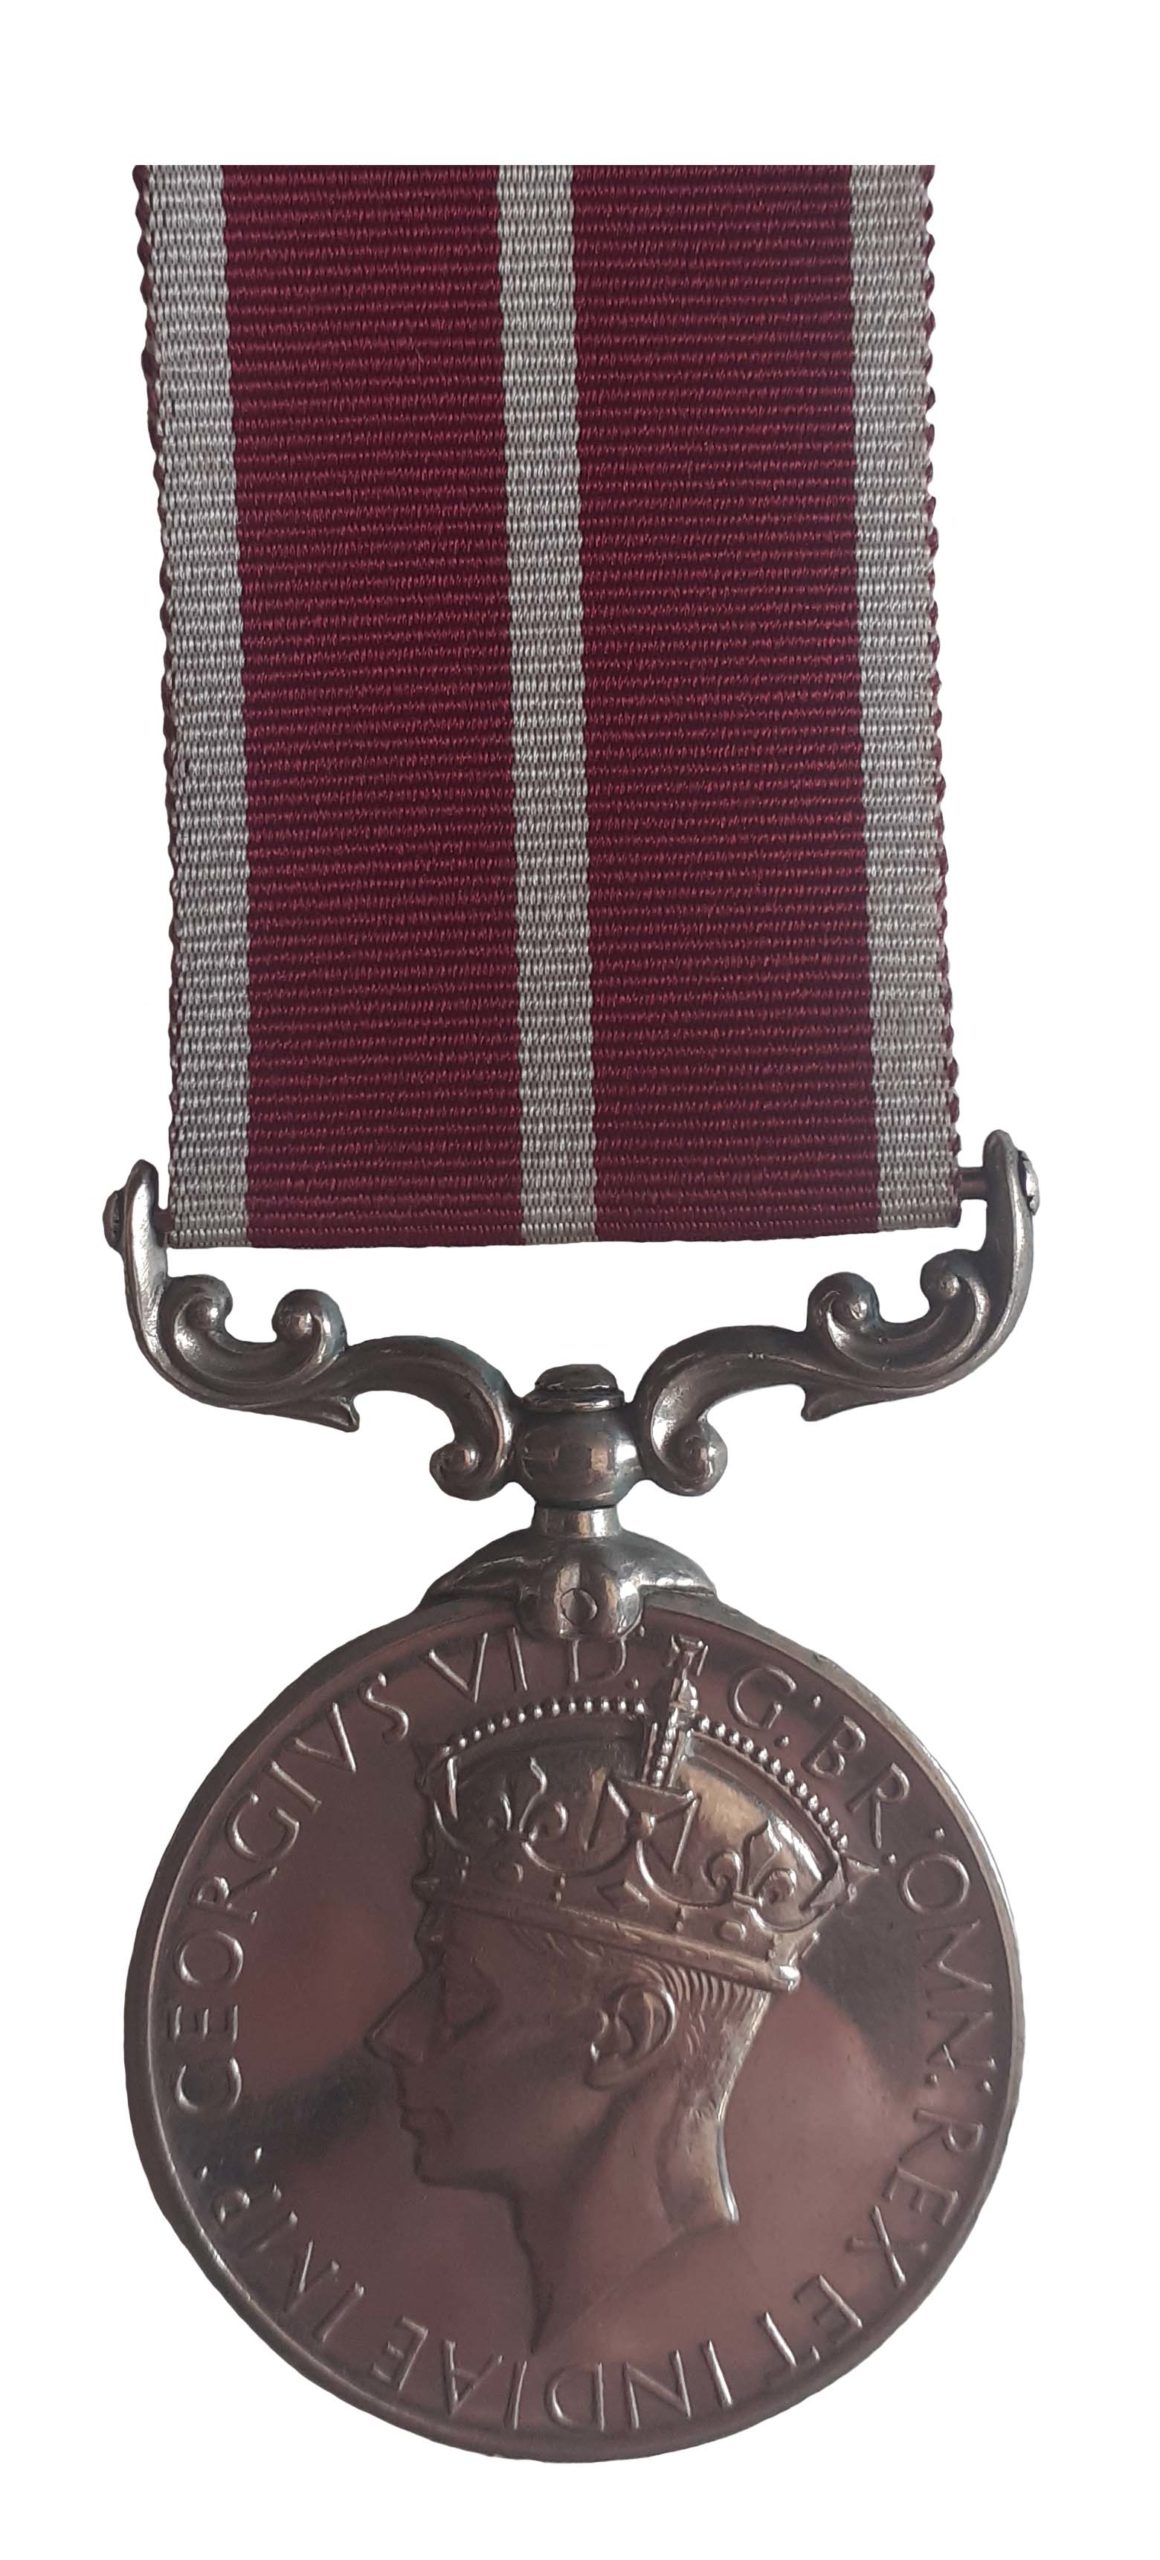 Indian Army Meritorious Service Medal 1888, GVIR, to Battalion Havildar Major Charat Singh